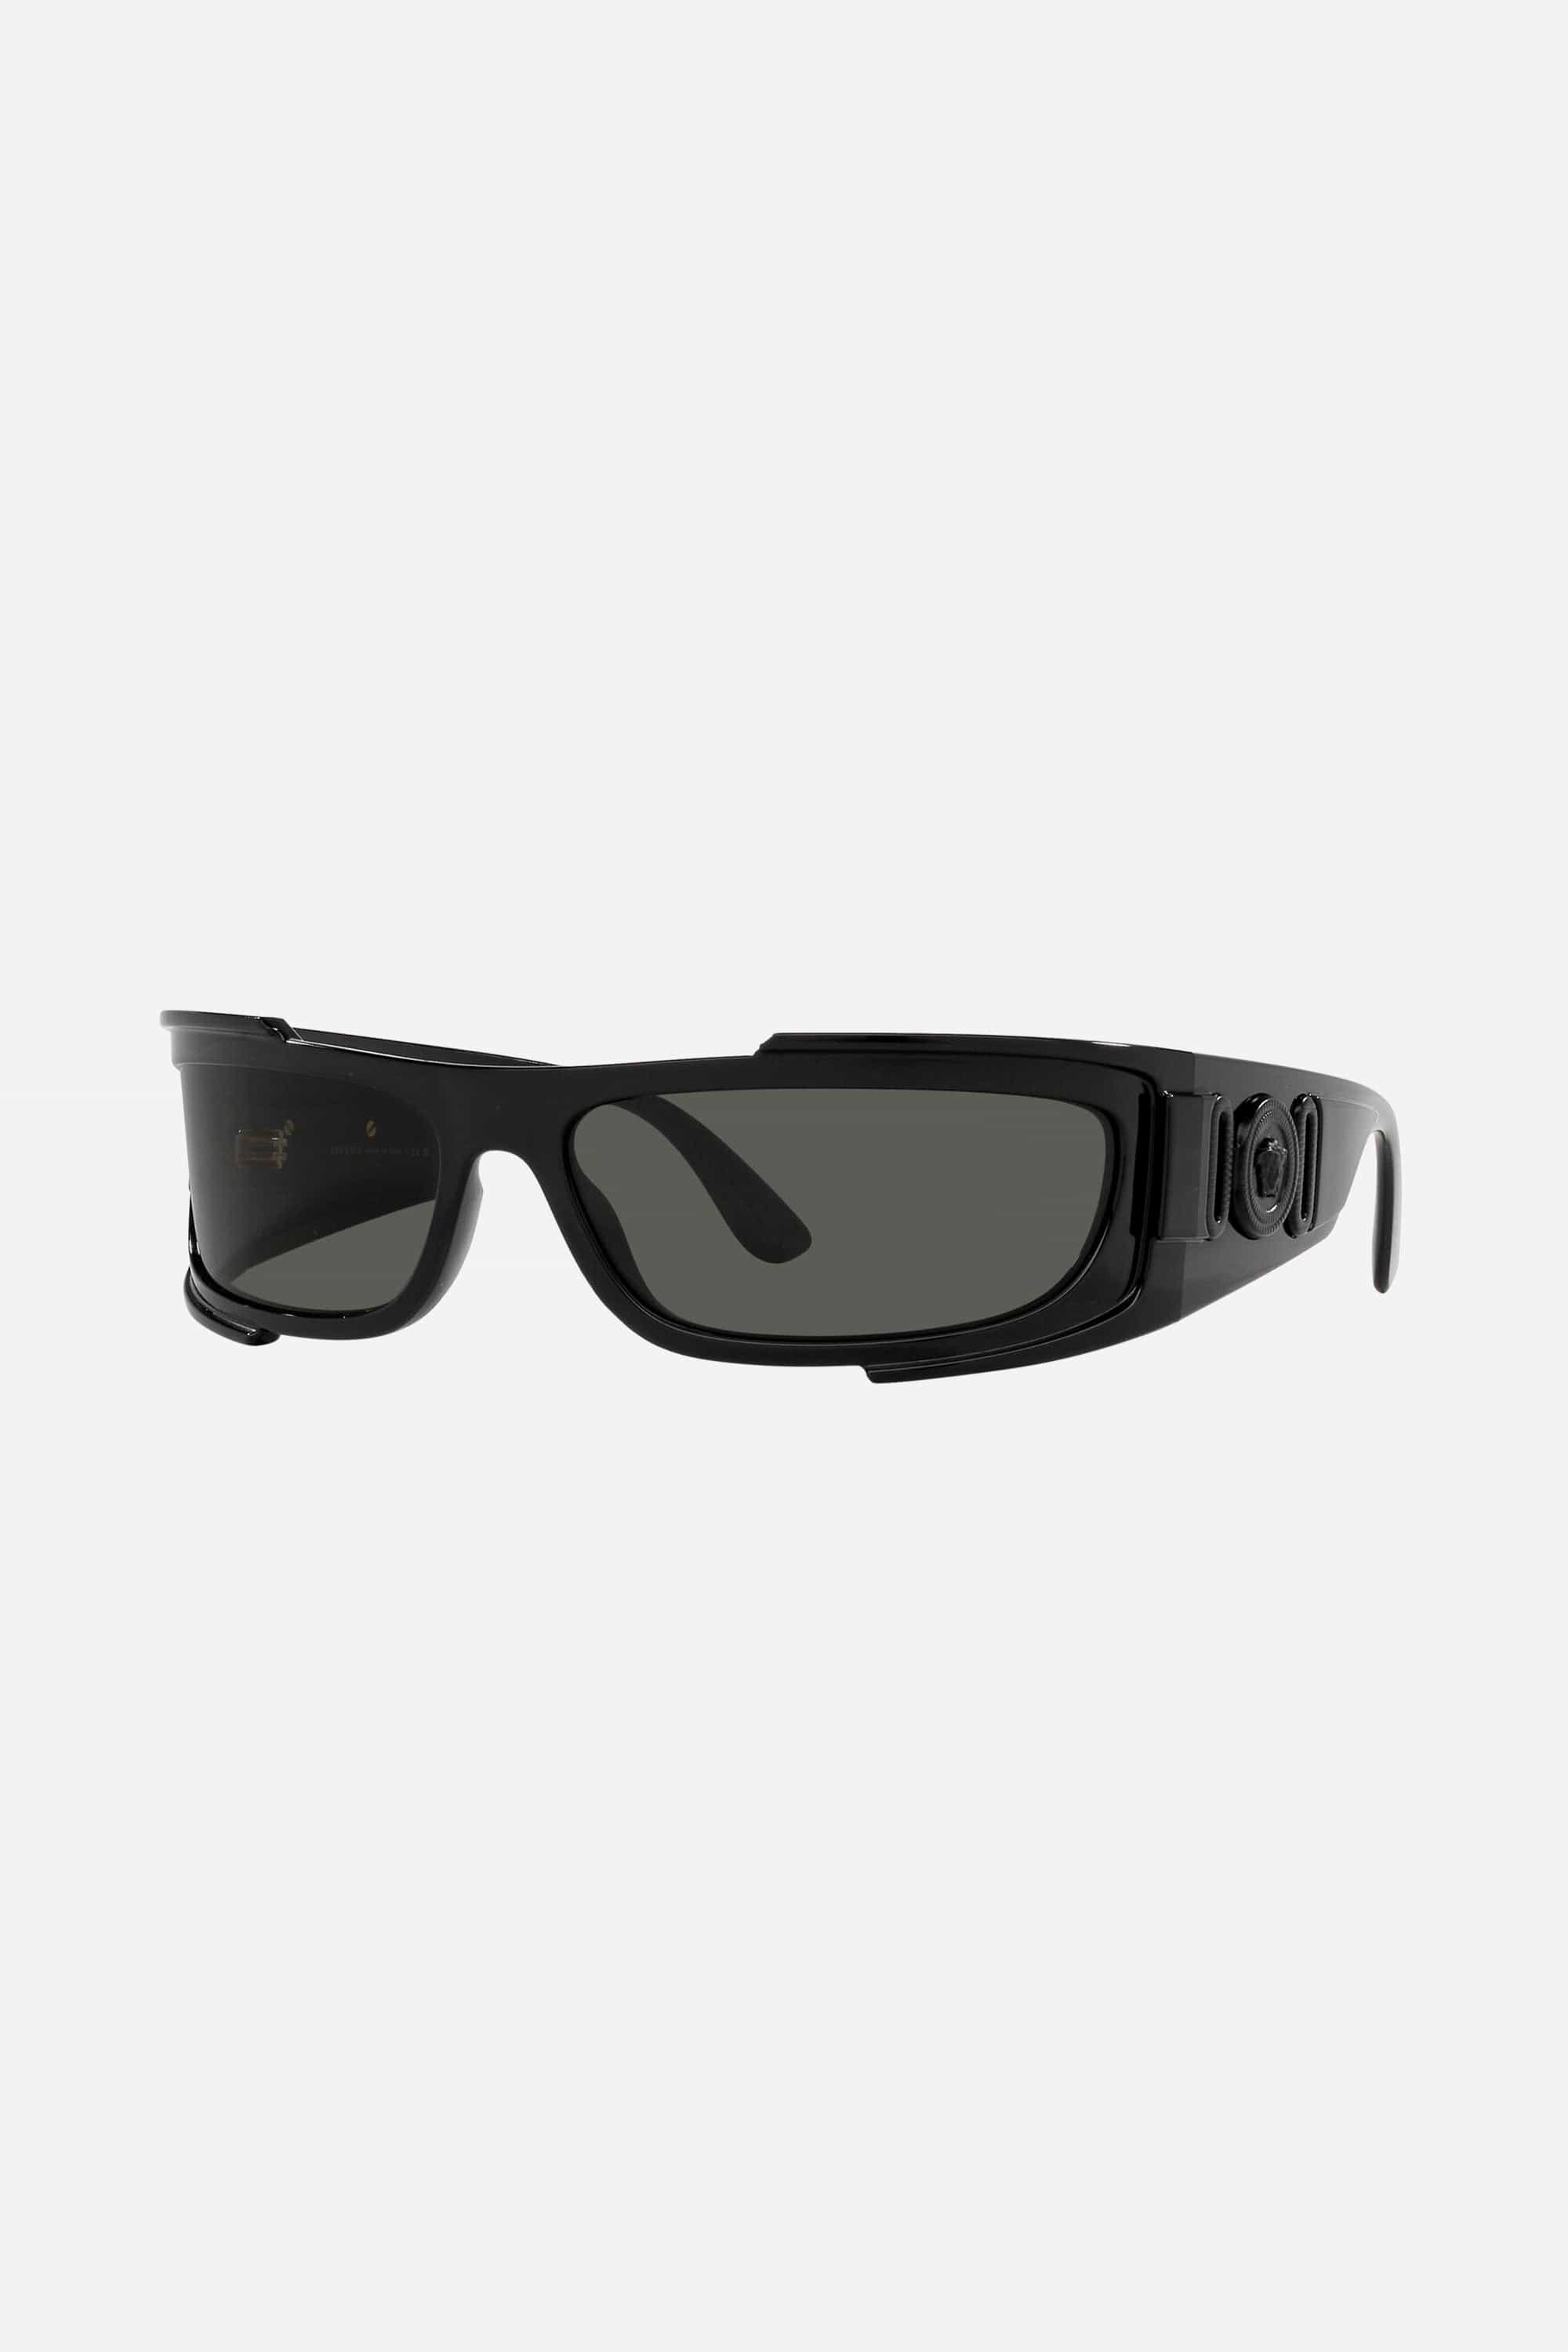 Versace rectangular black sunglasses with the iconic jellyfish - Eyewear Club